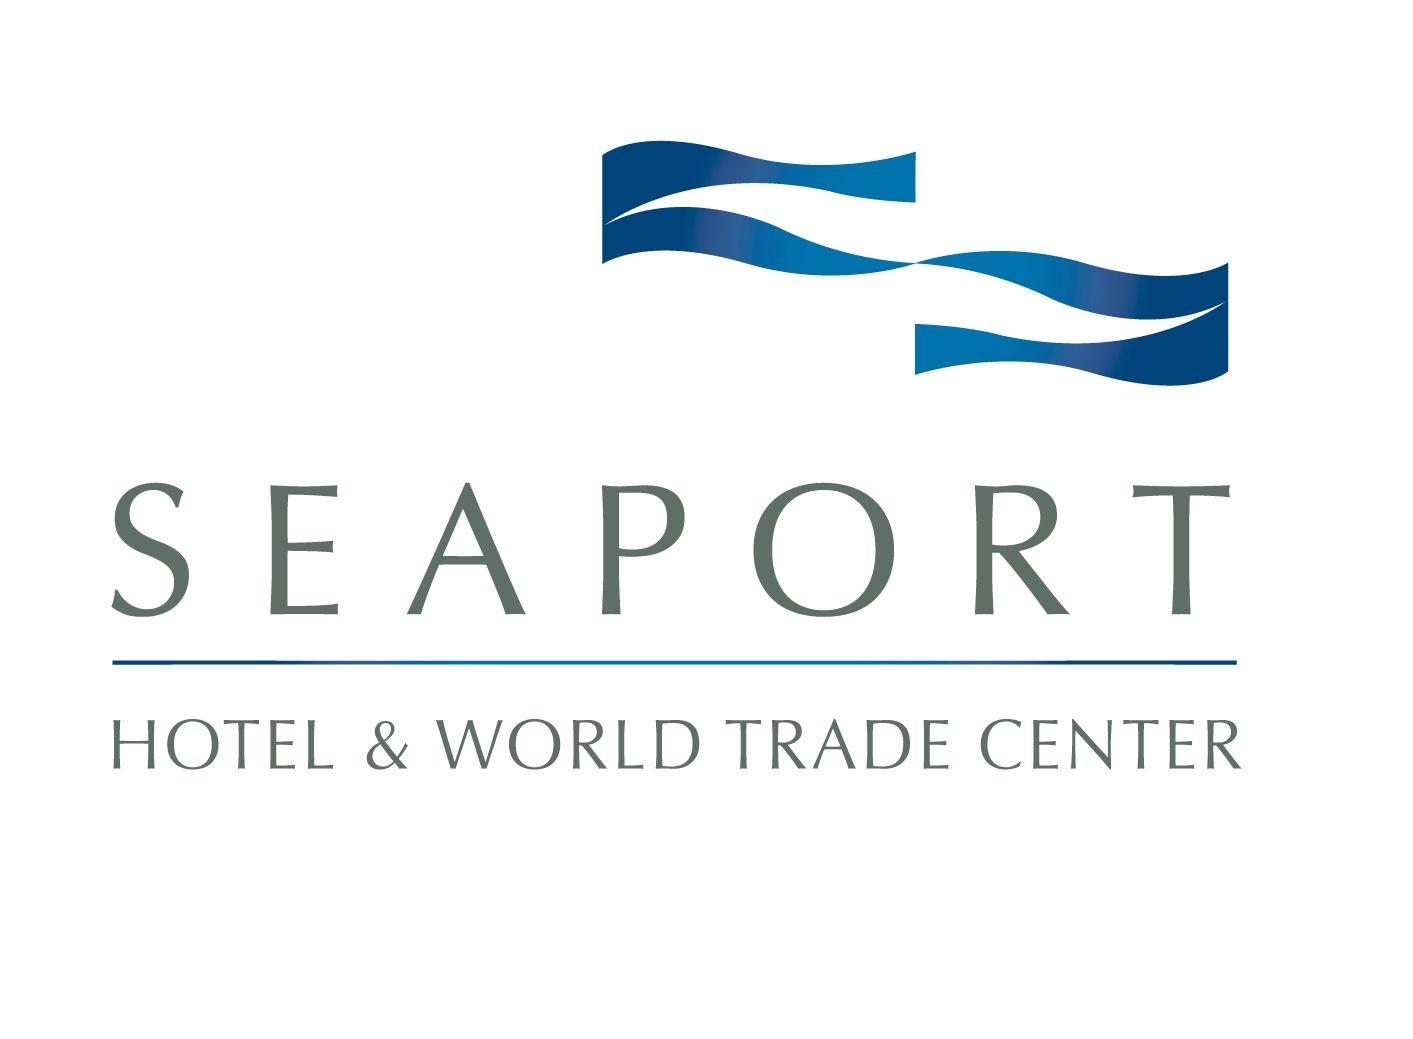 Seaport Logo - Seaport Hotel